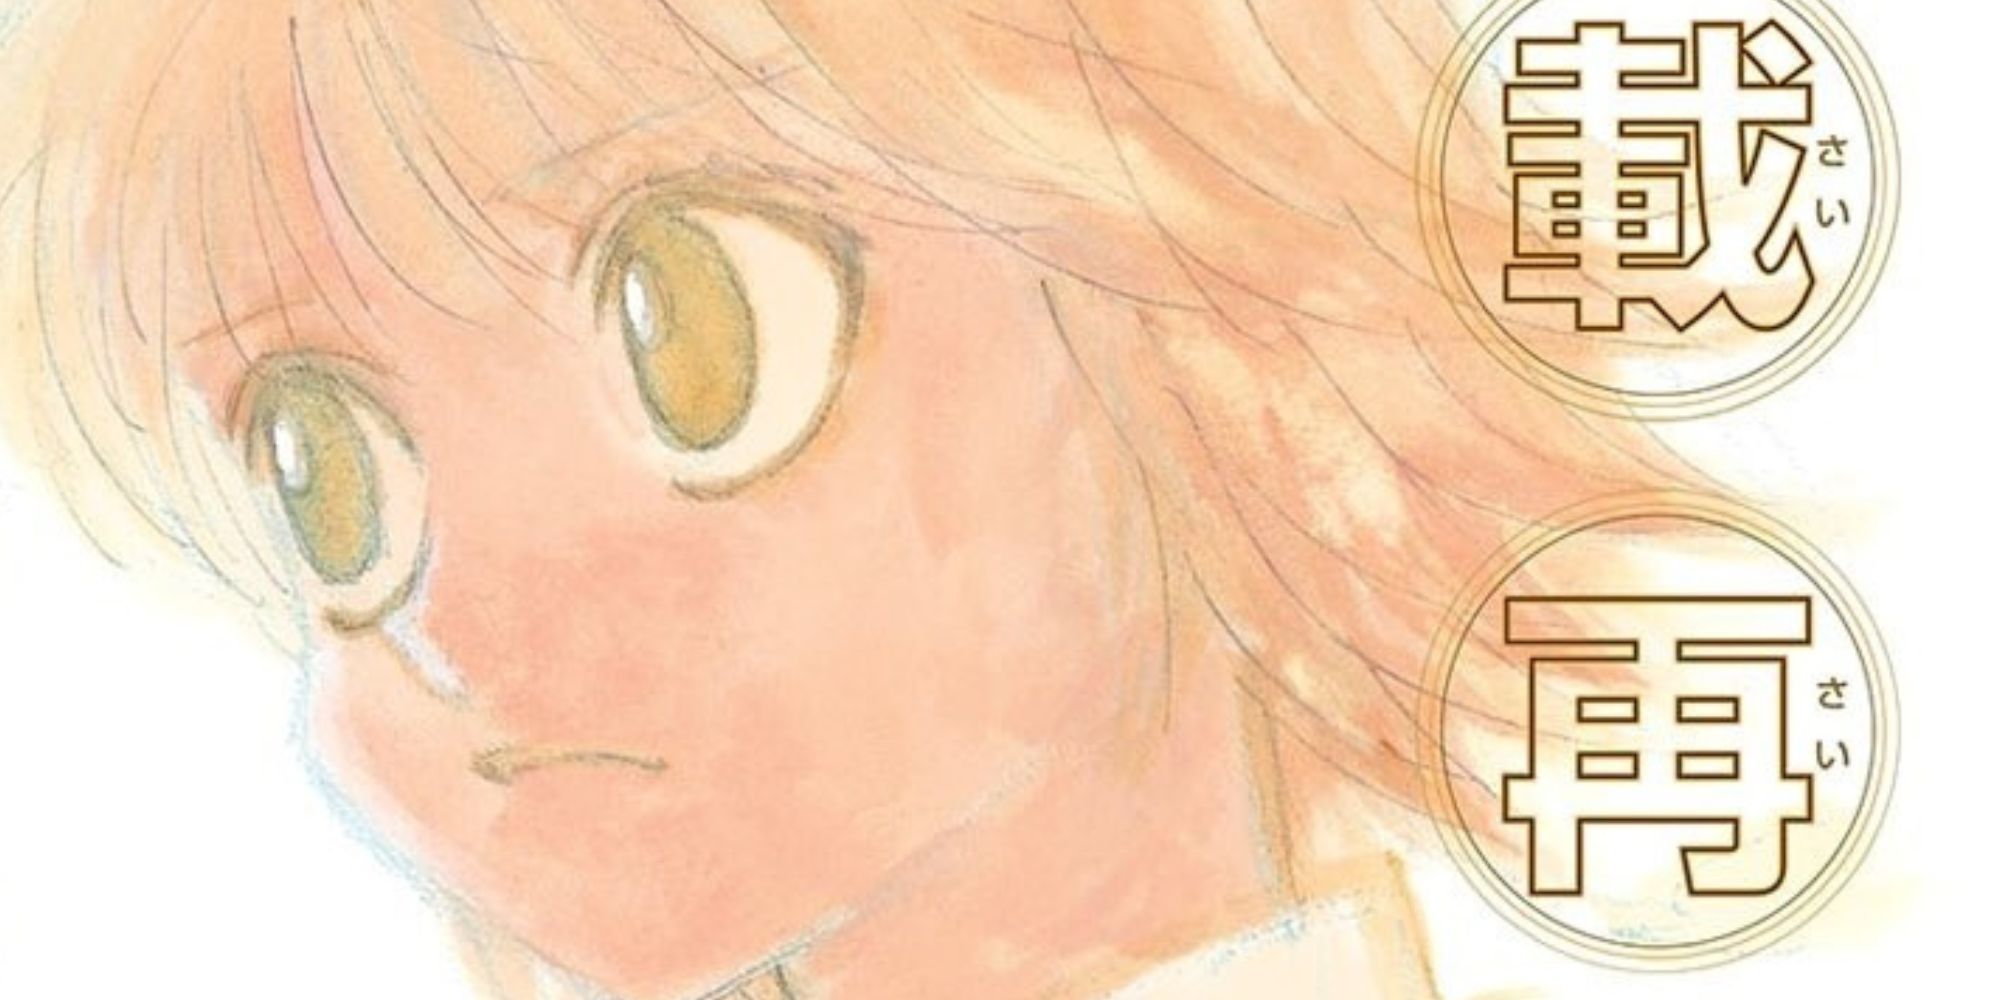 Hunter x Hunter's Yoshihiro Togashi Confirms Work on Manga's Next Volume Is  Done